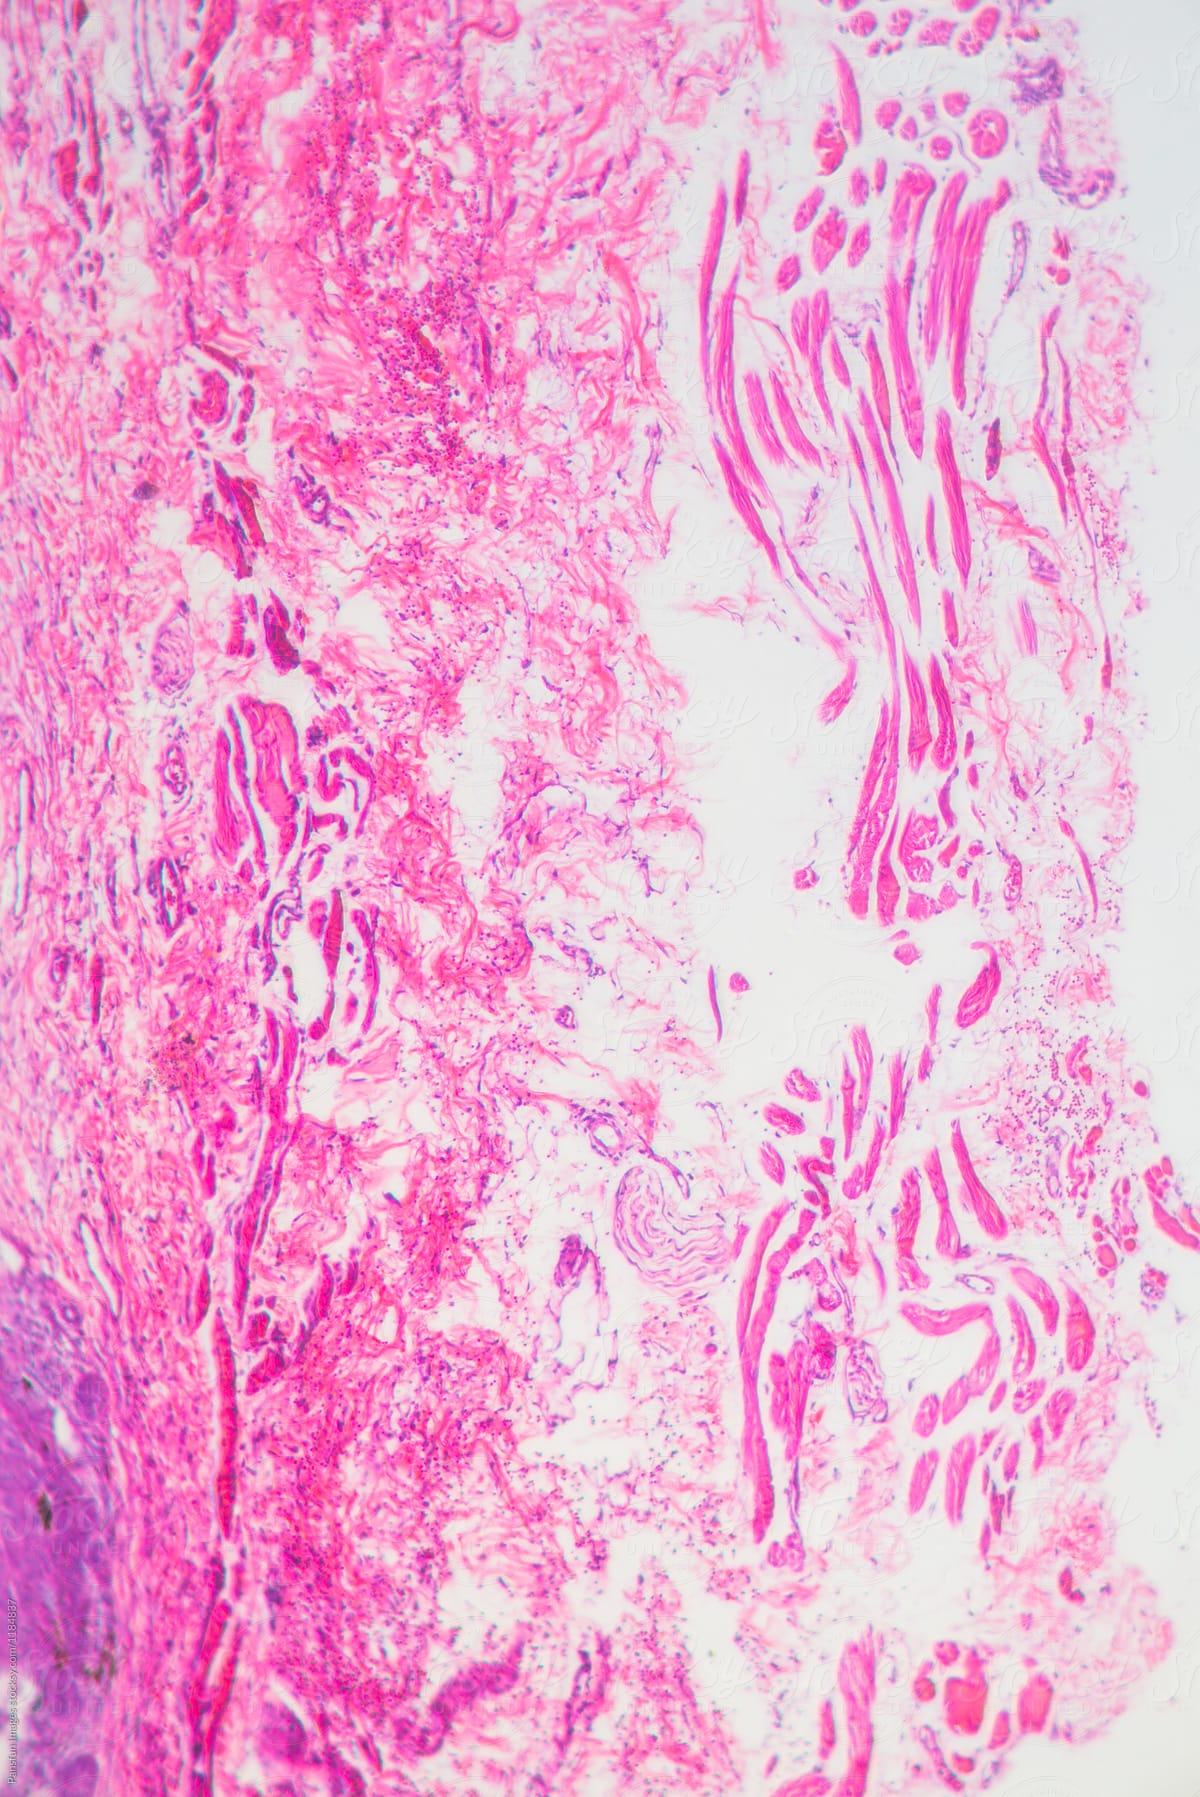 micrograph of human basal cell cancer